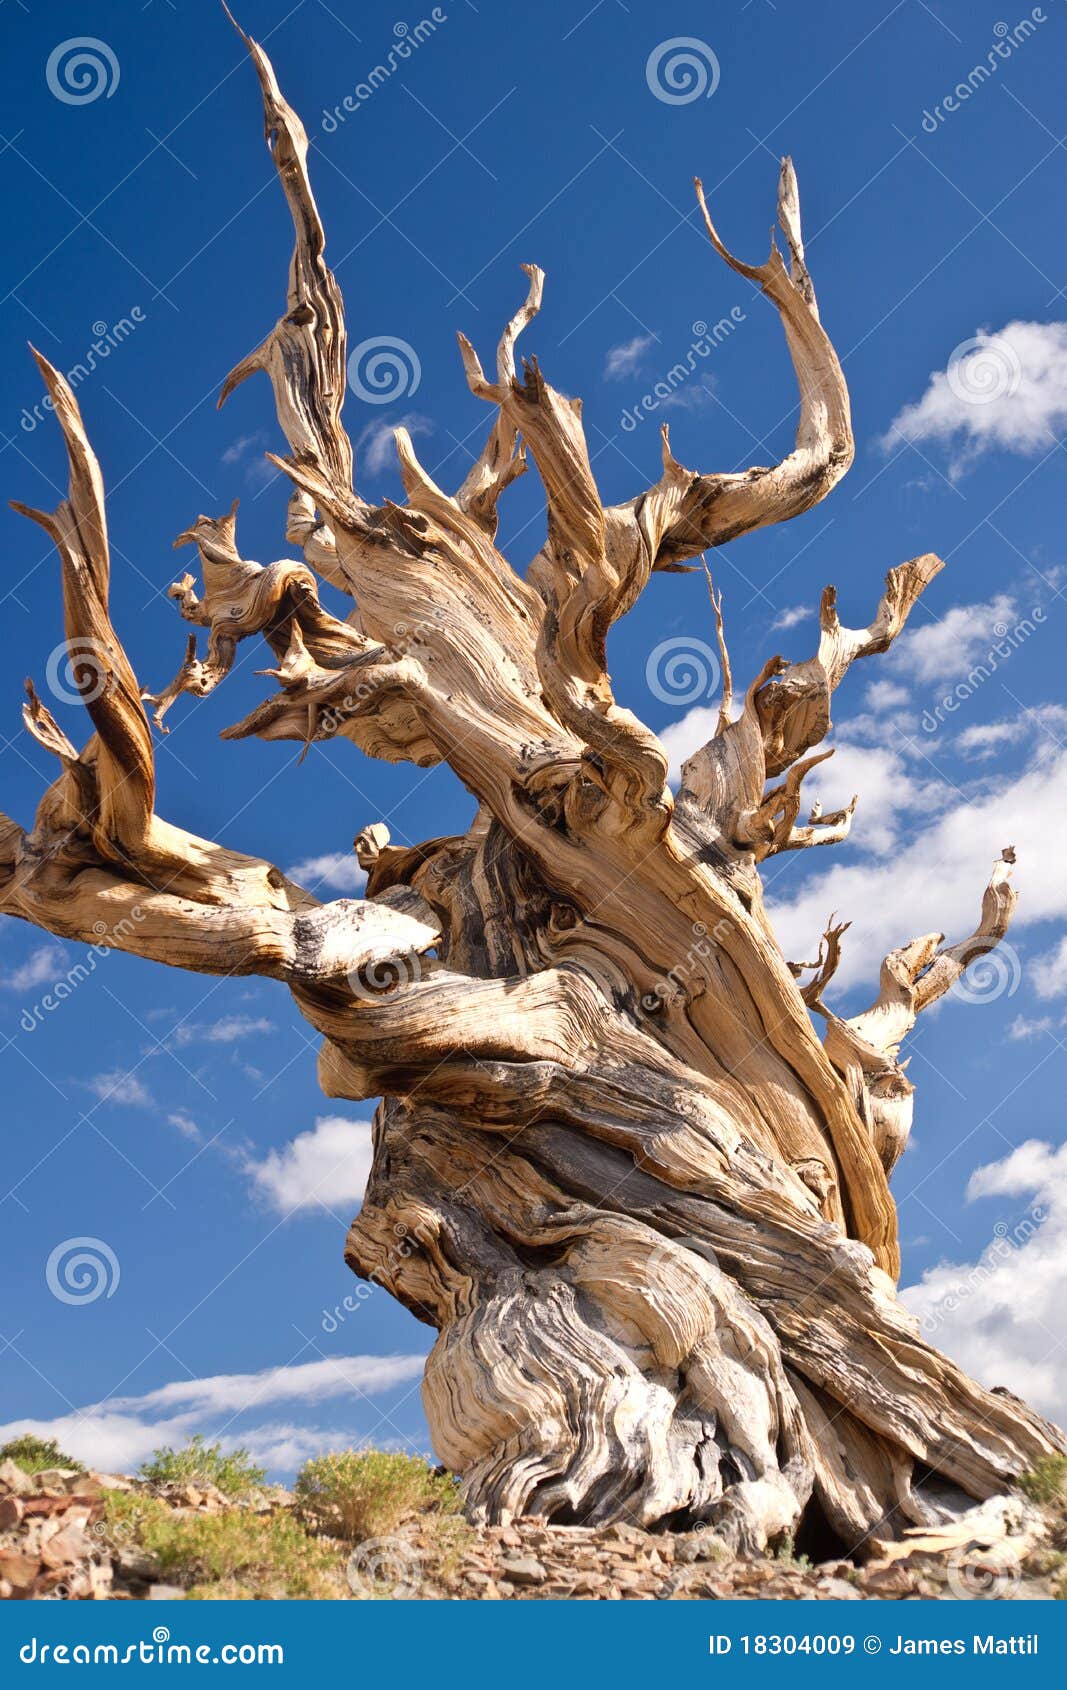 world's oldest tree: the bristlecone pine